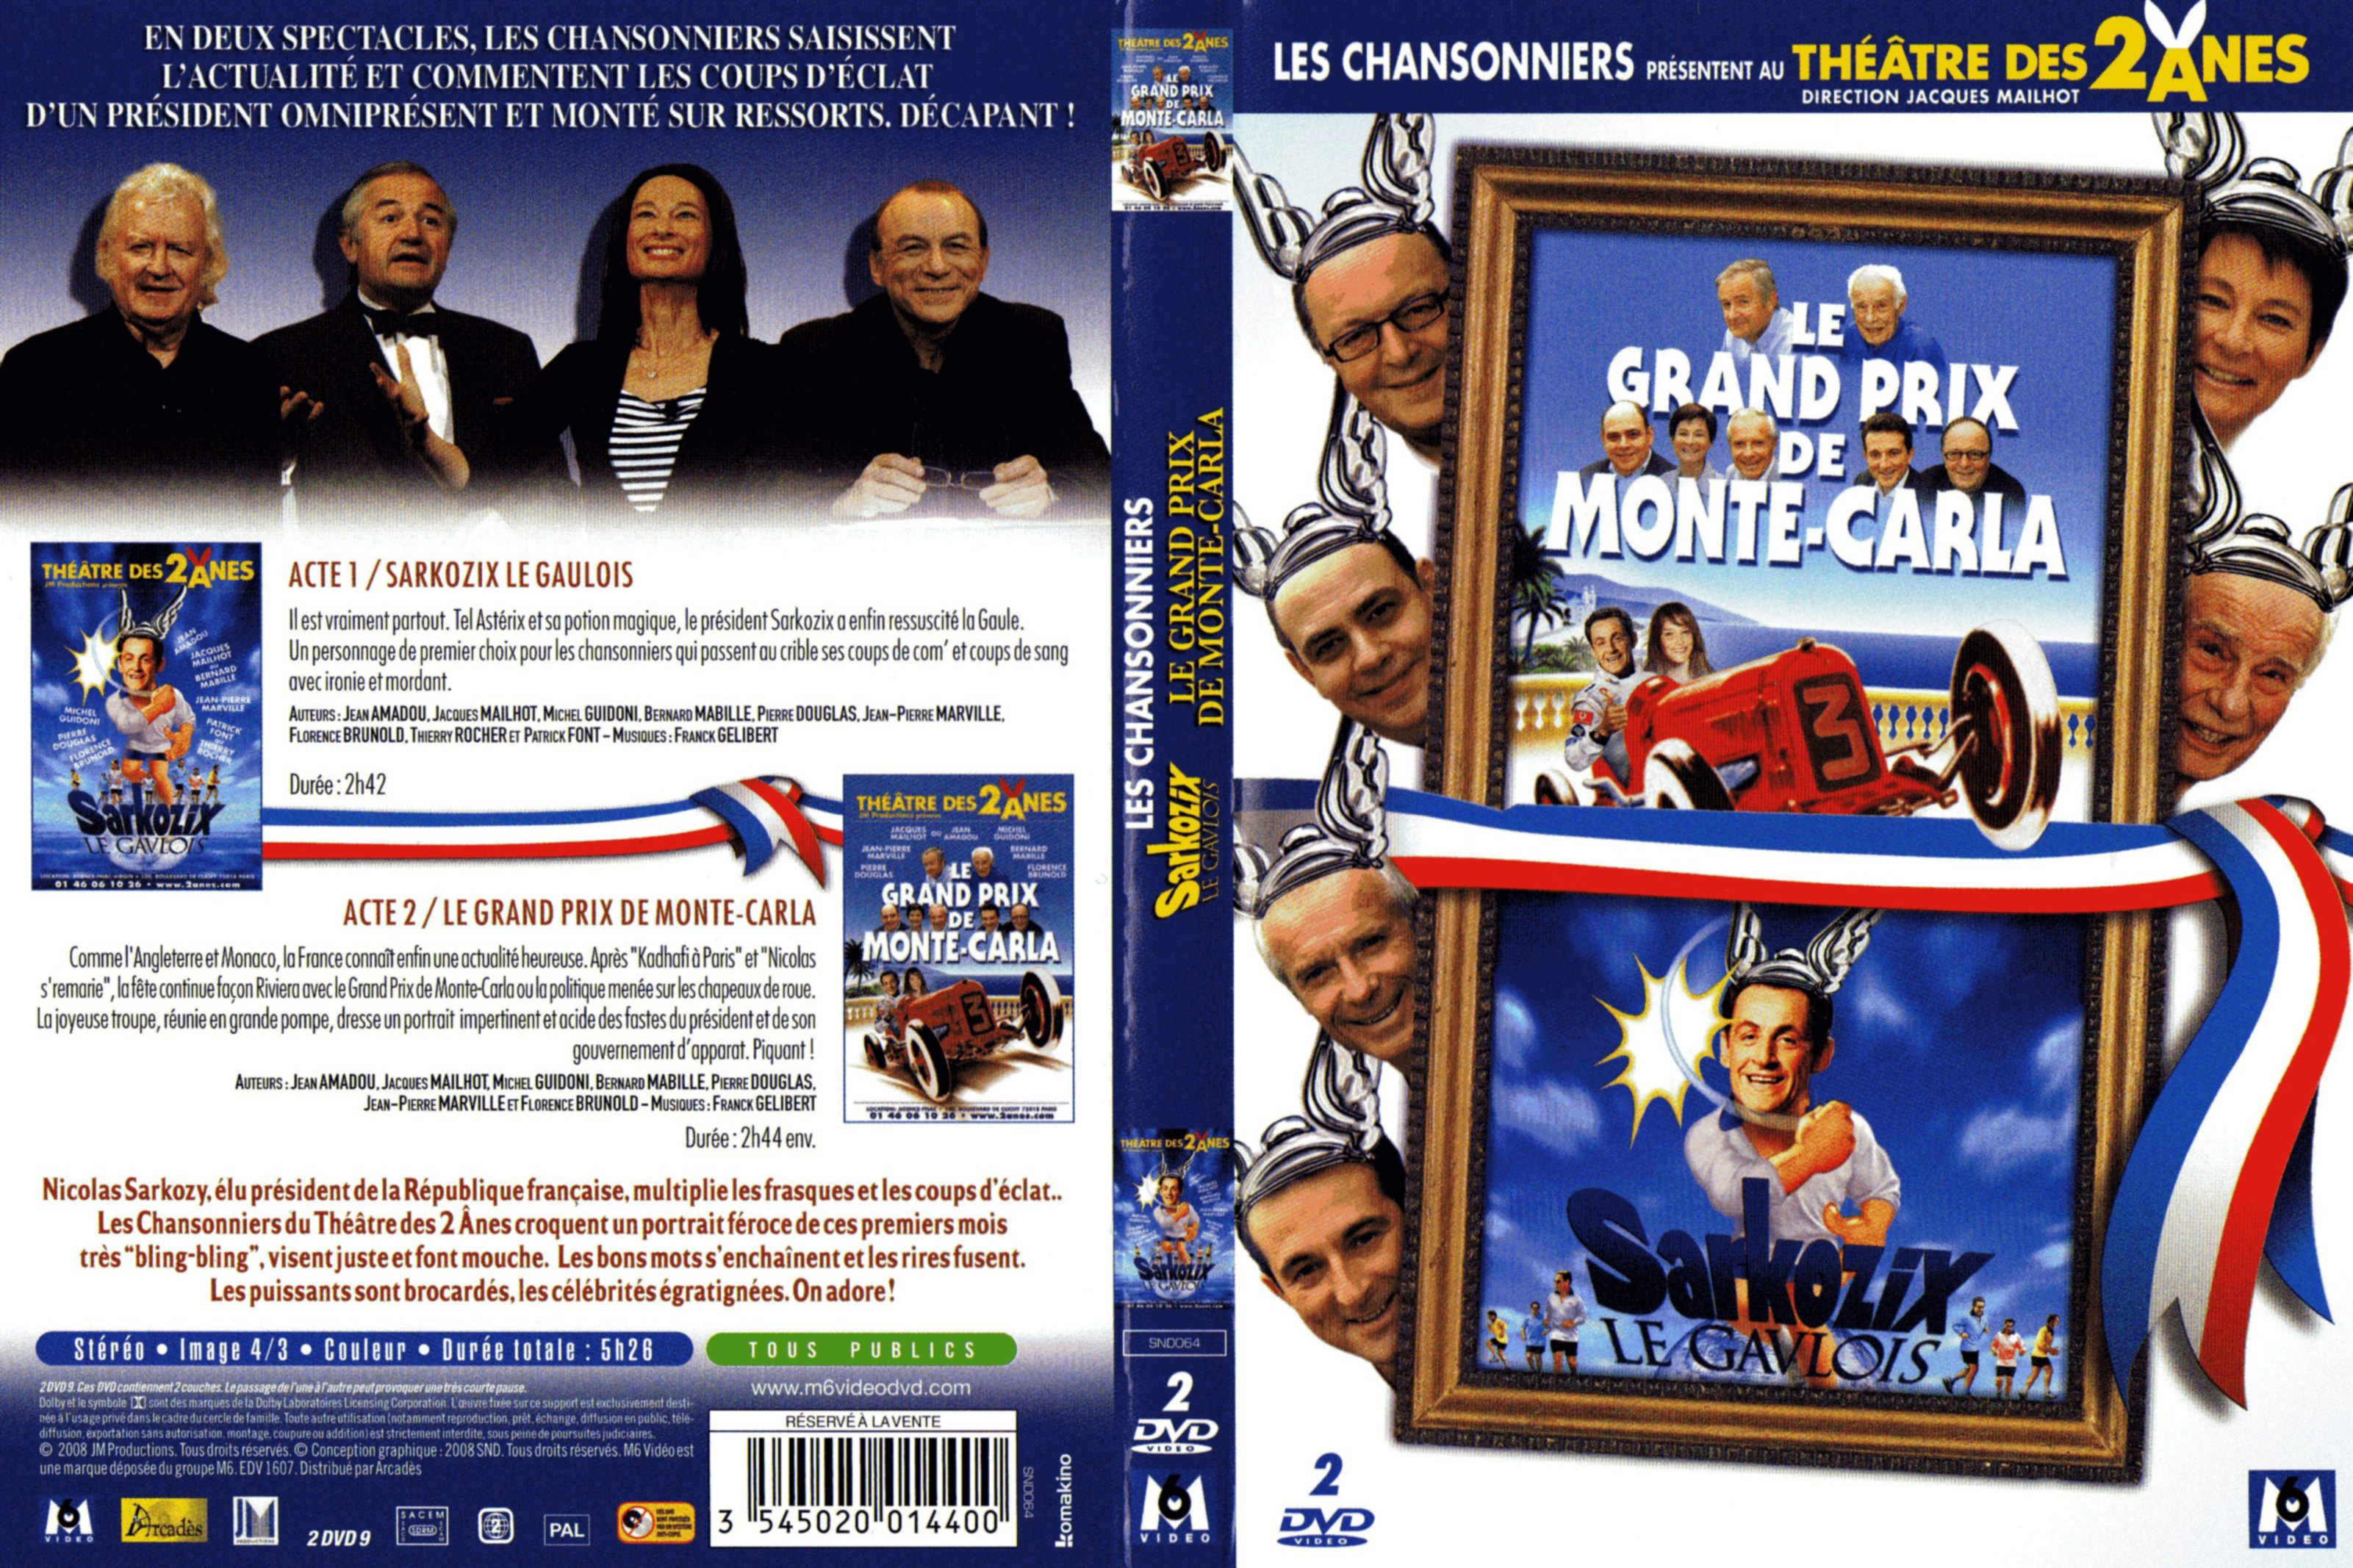 Jaquette DVD Theatre des 2 anes - Sarkosix le gaulois + Le grand prix de Monte-Carla